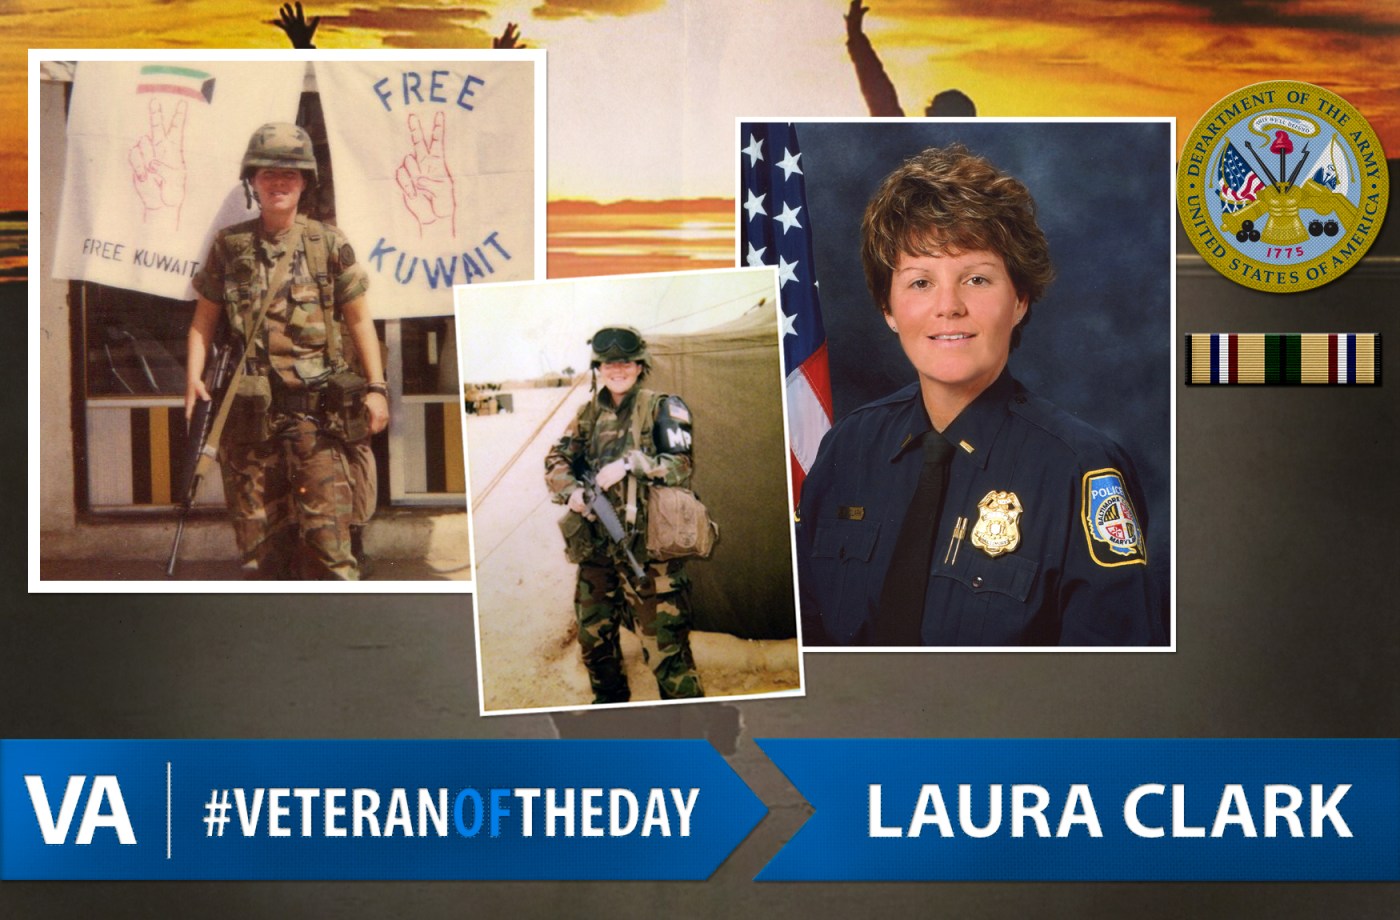 Veteran of the Day Laura Clark